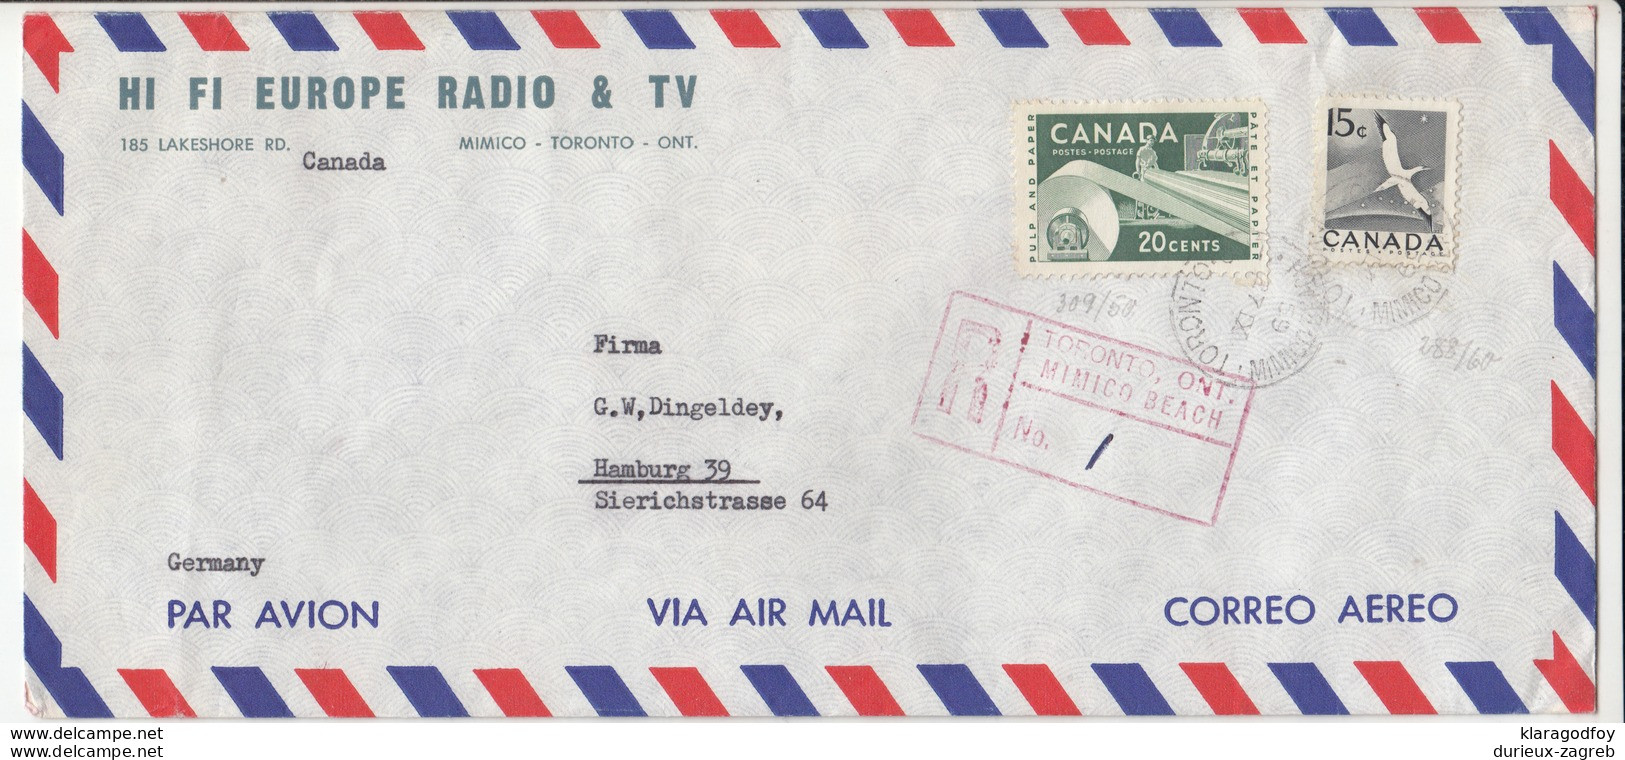 Canada, Hi Fi Europe Radio & TV Airmail Letter Cover Registered Travelled 1965 Toronto Pmk B180205 - Briefe U. Dokumente